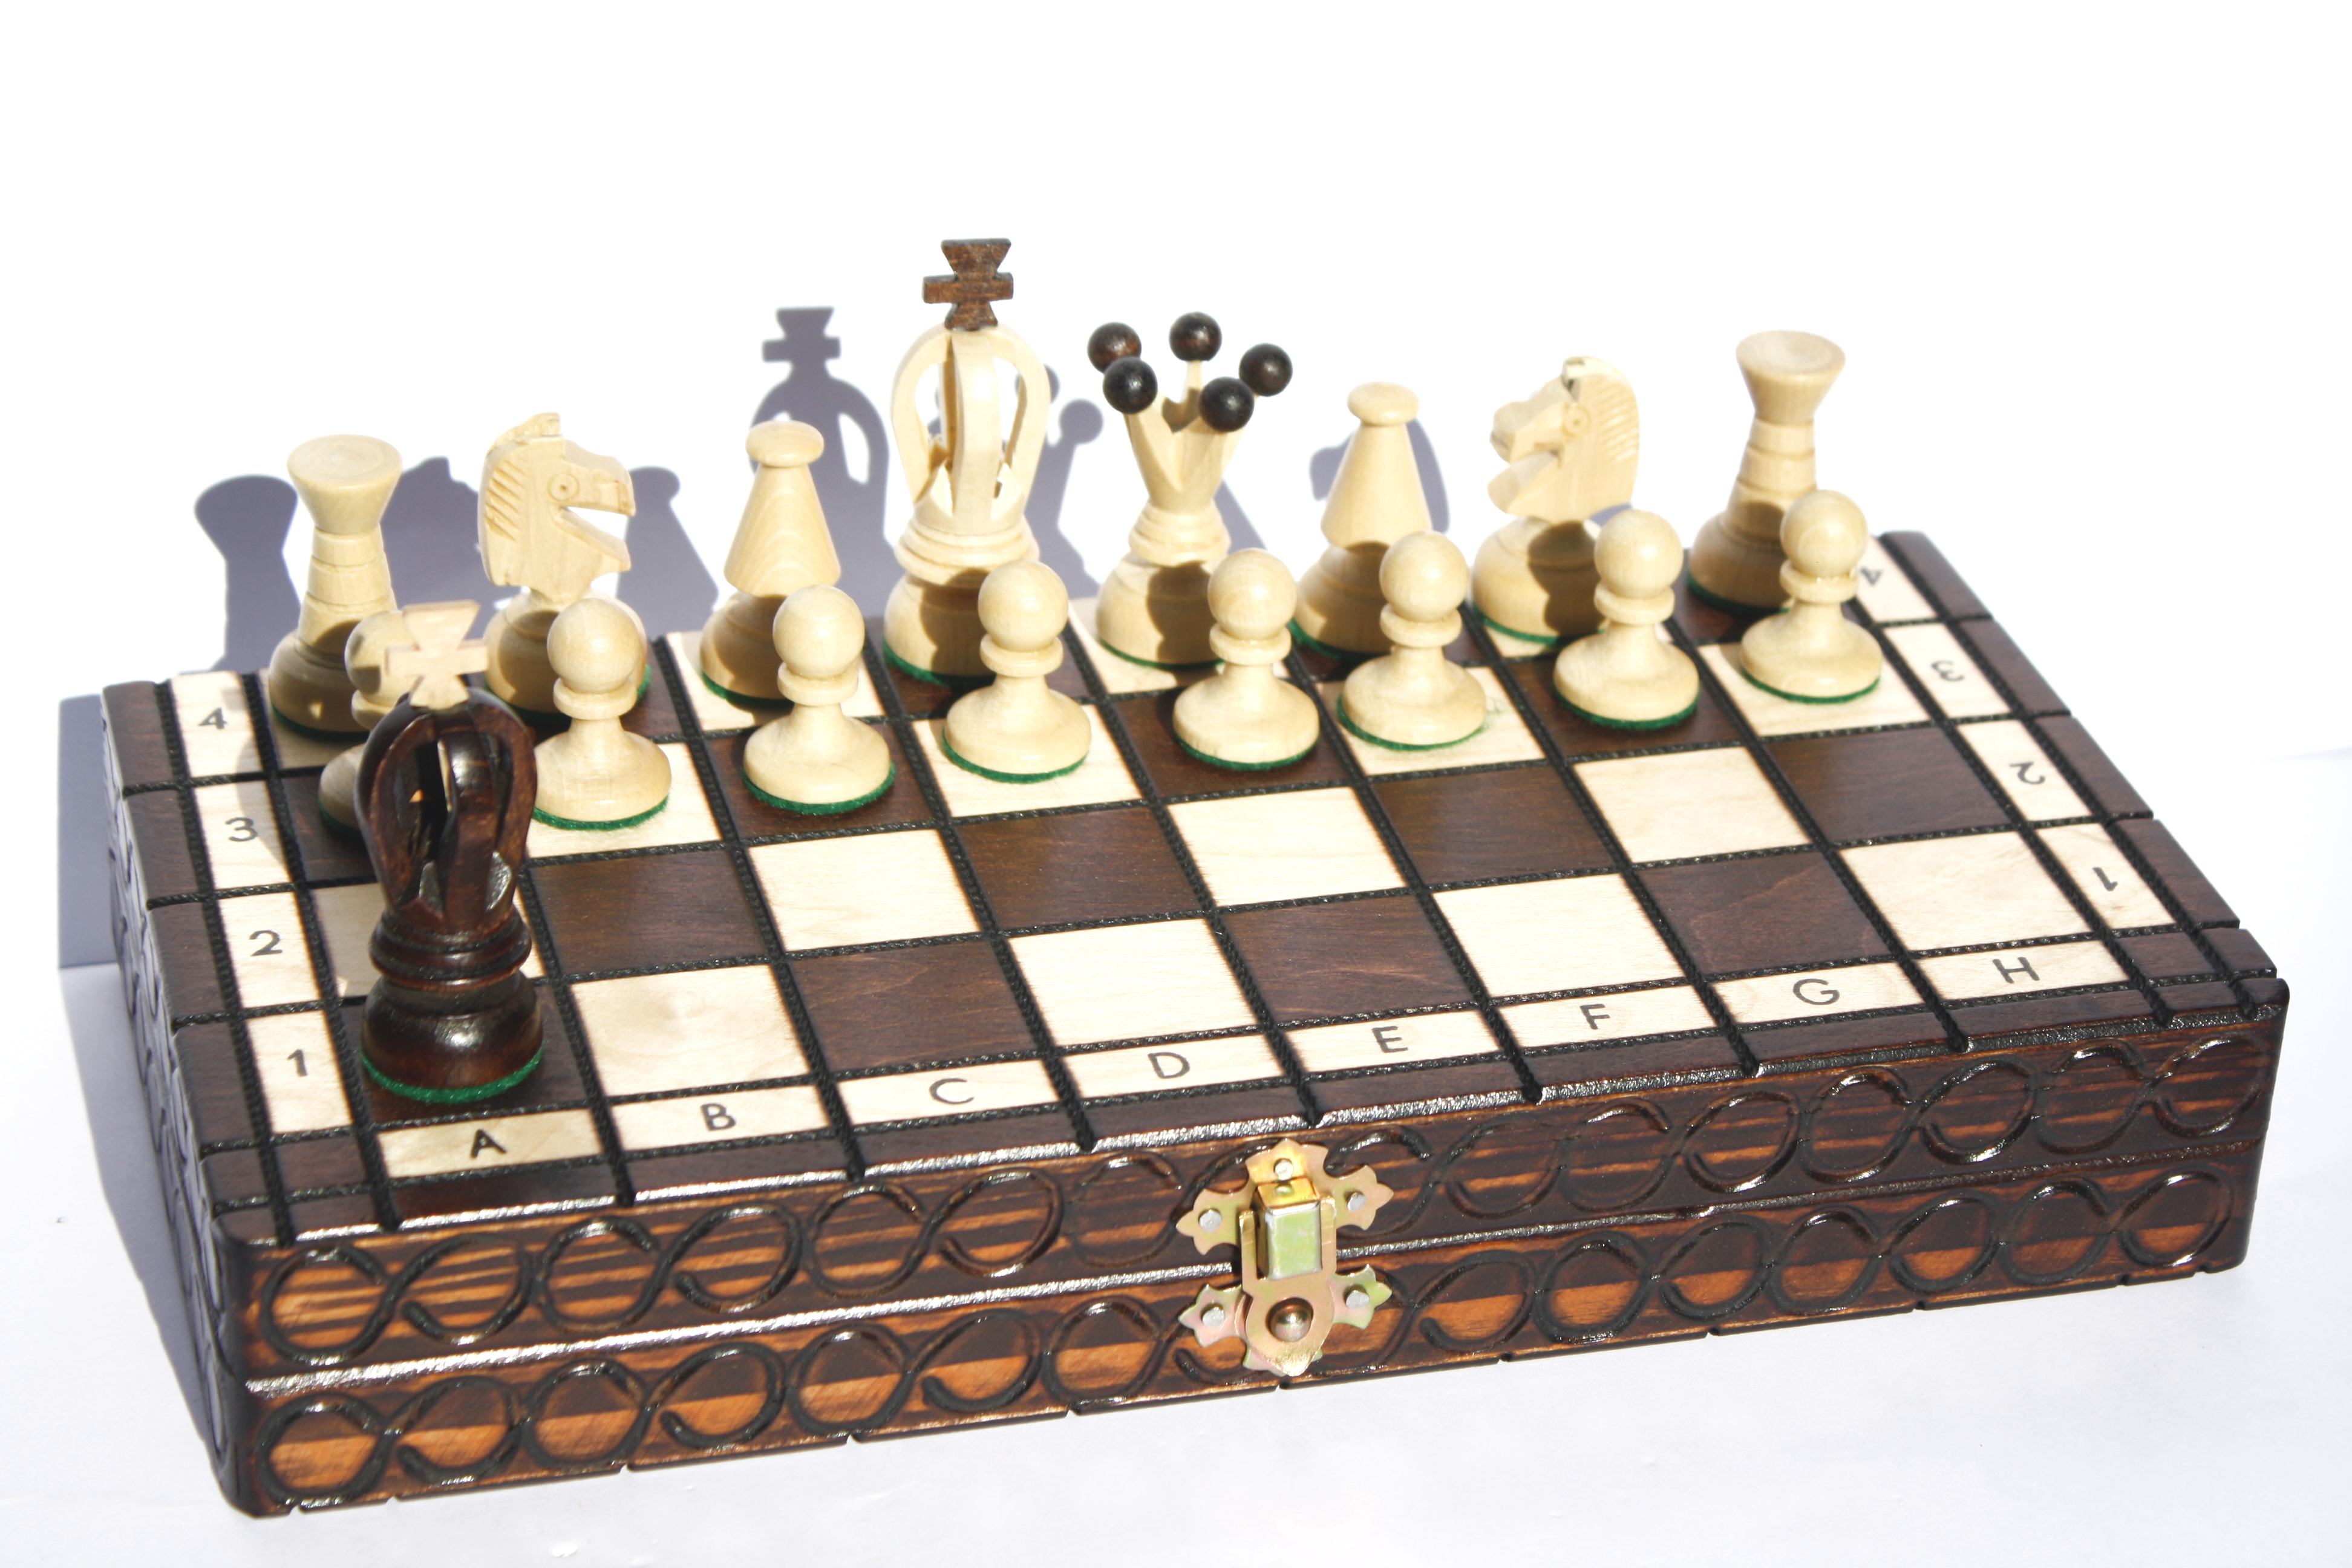  Chess Set - Kings Small brown